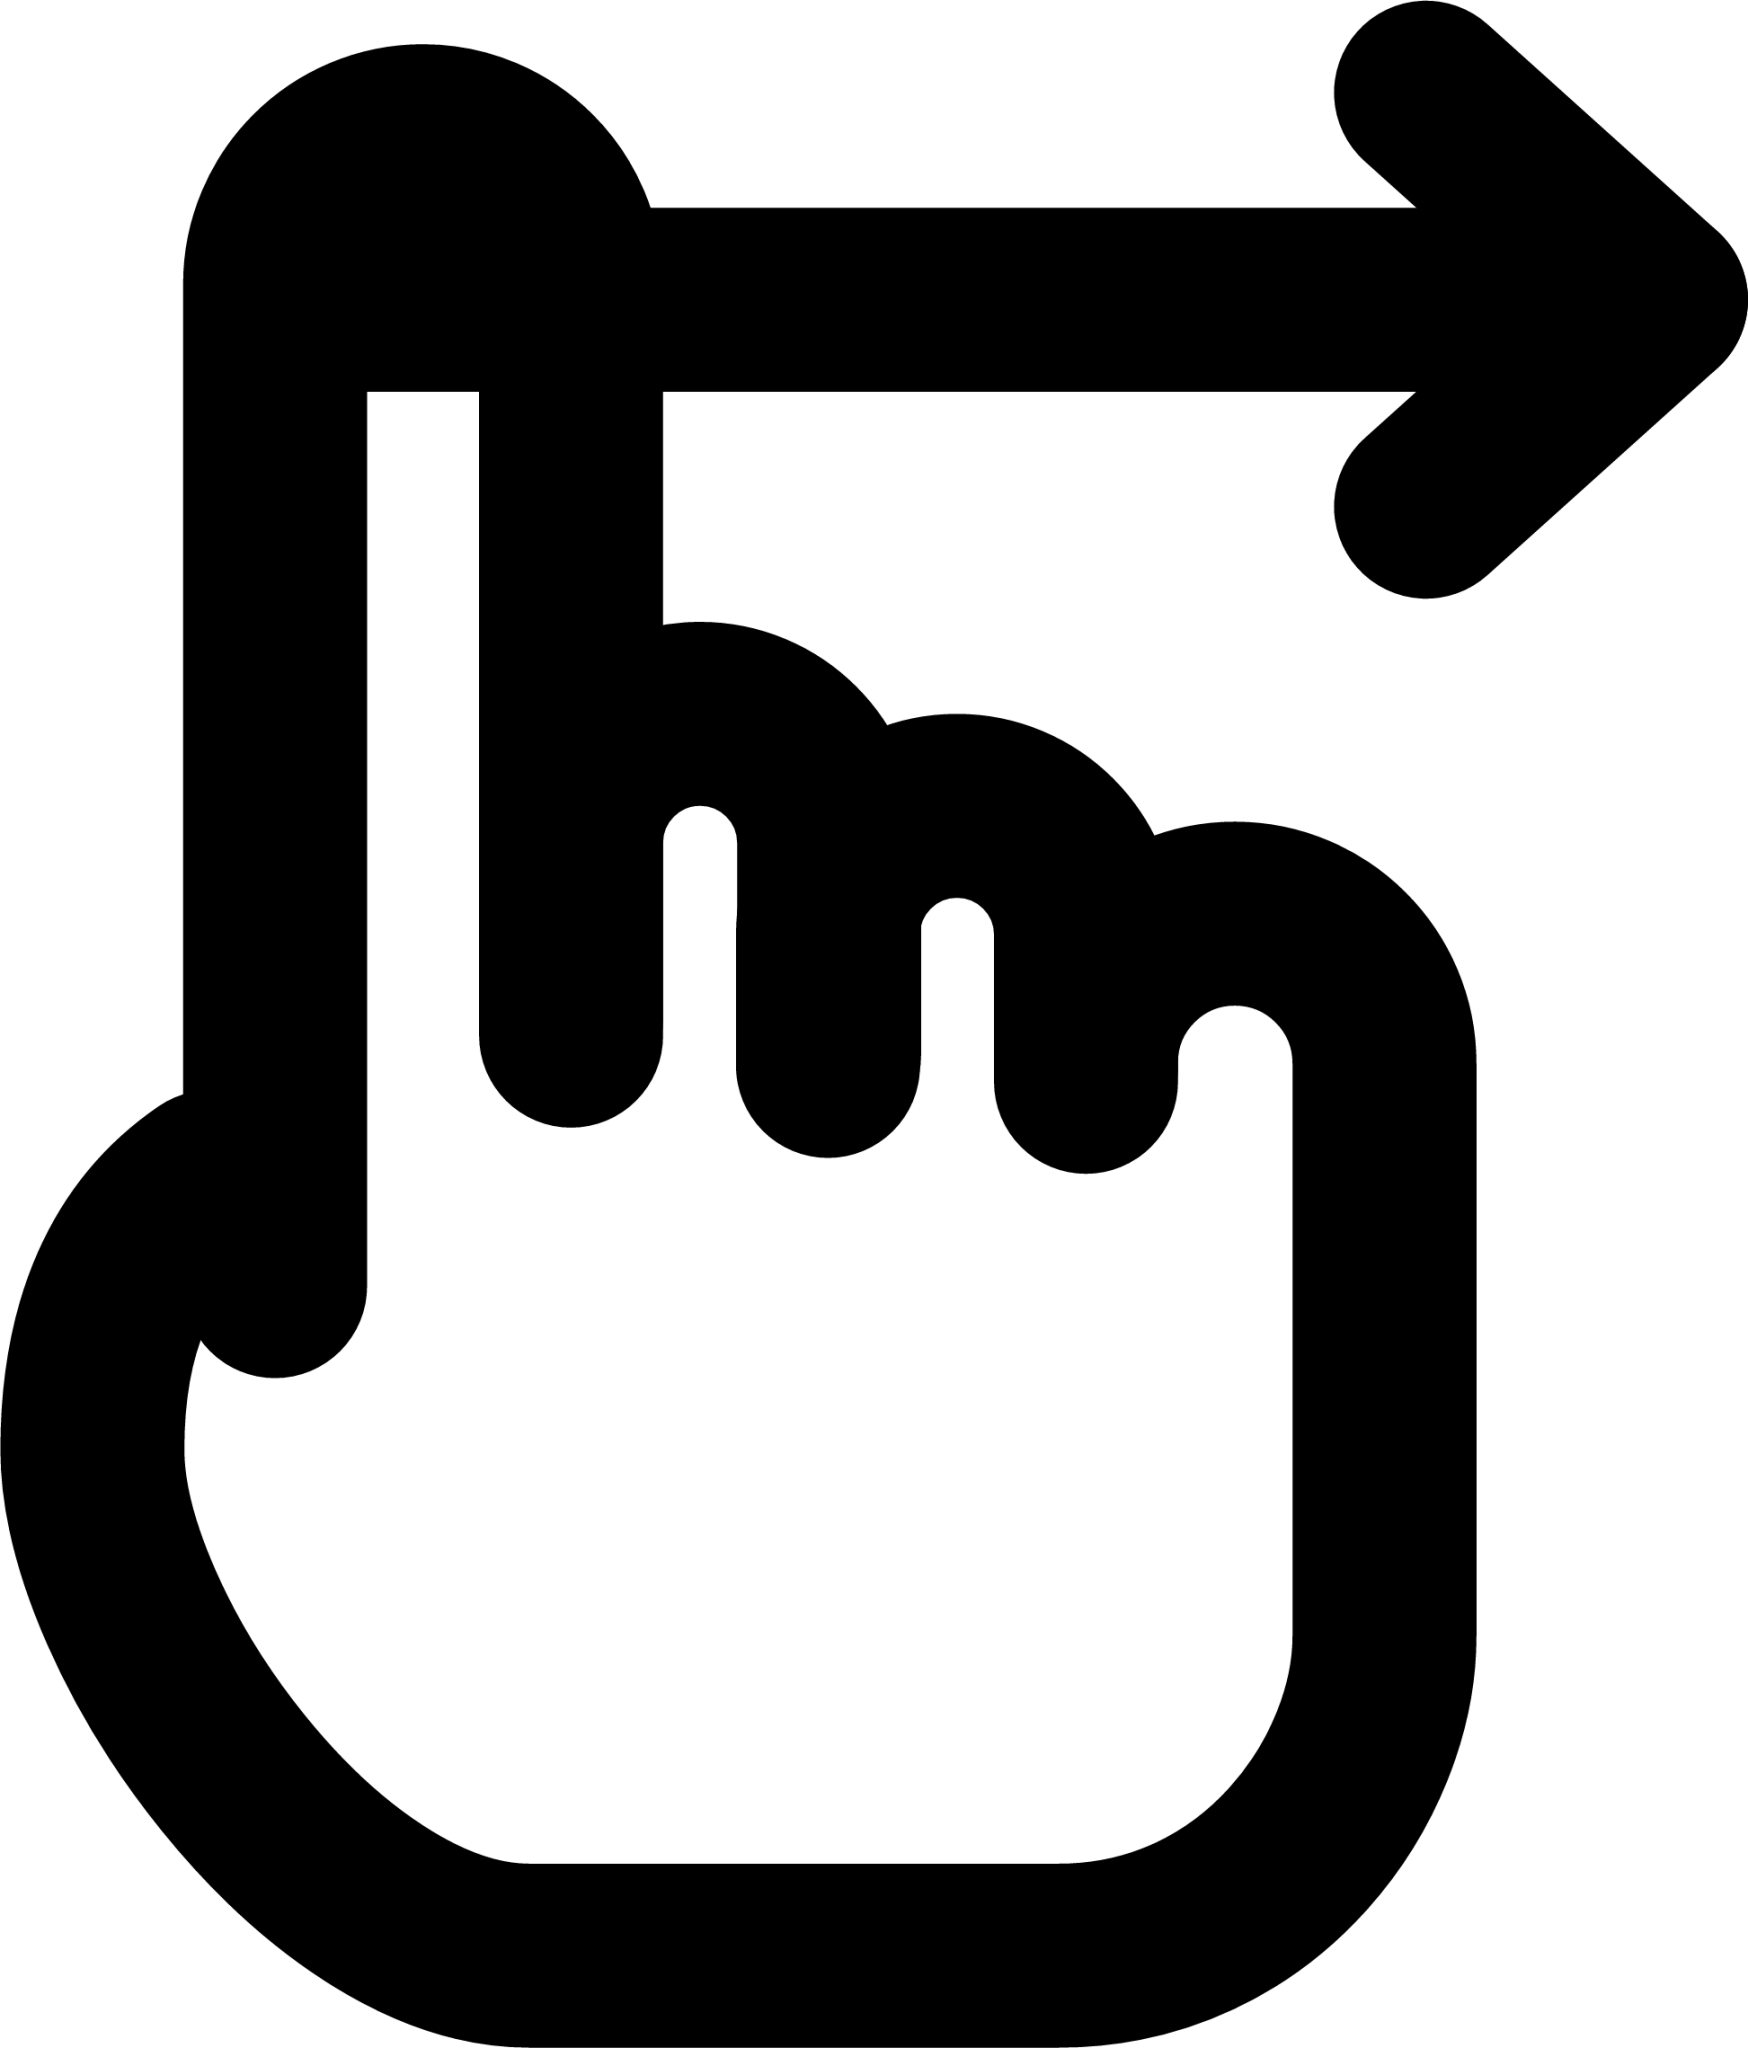 hand drag icon